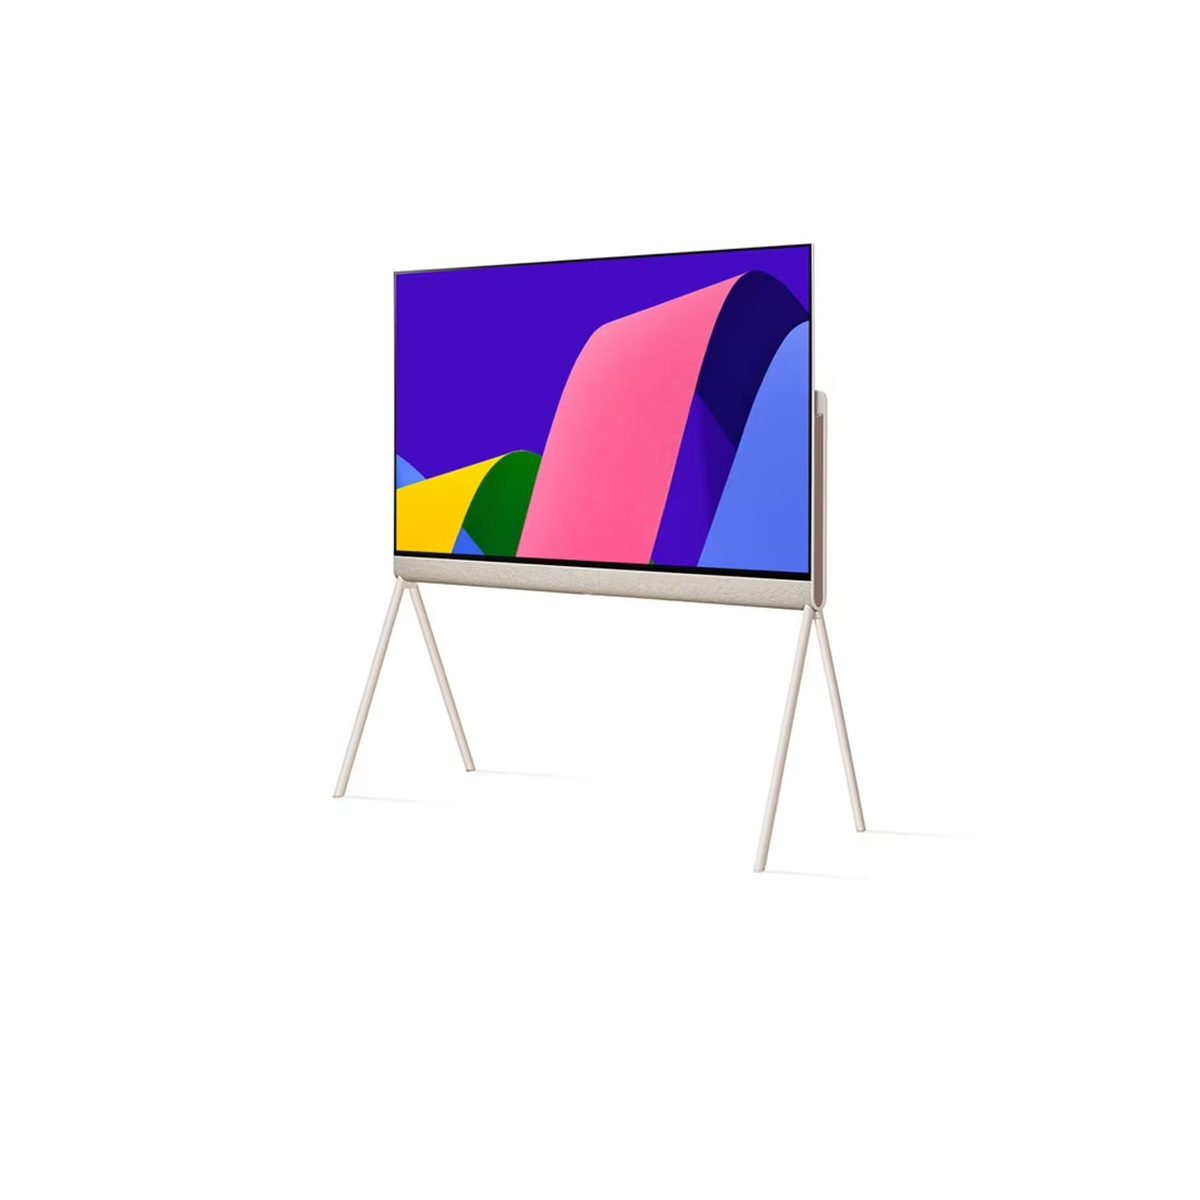 LG OLED Pose 55 Inch 4K TV Smart TV, All Around-Design, a9 Gen5 AI processor - 55LX1Q6LA